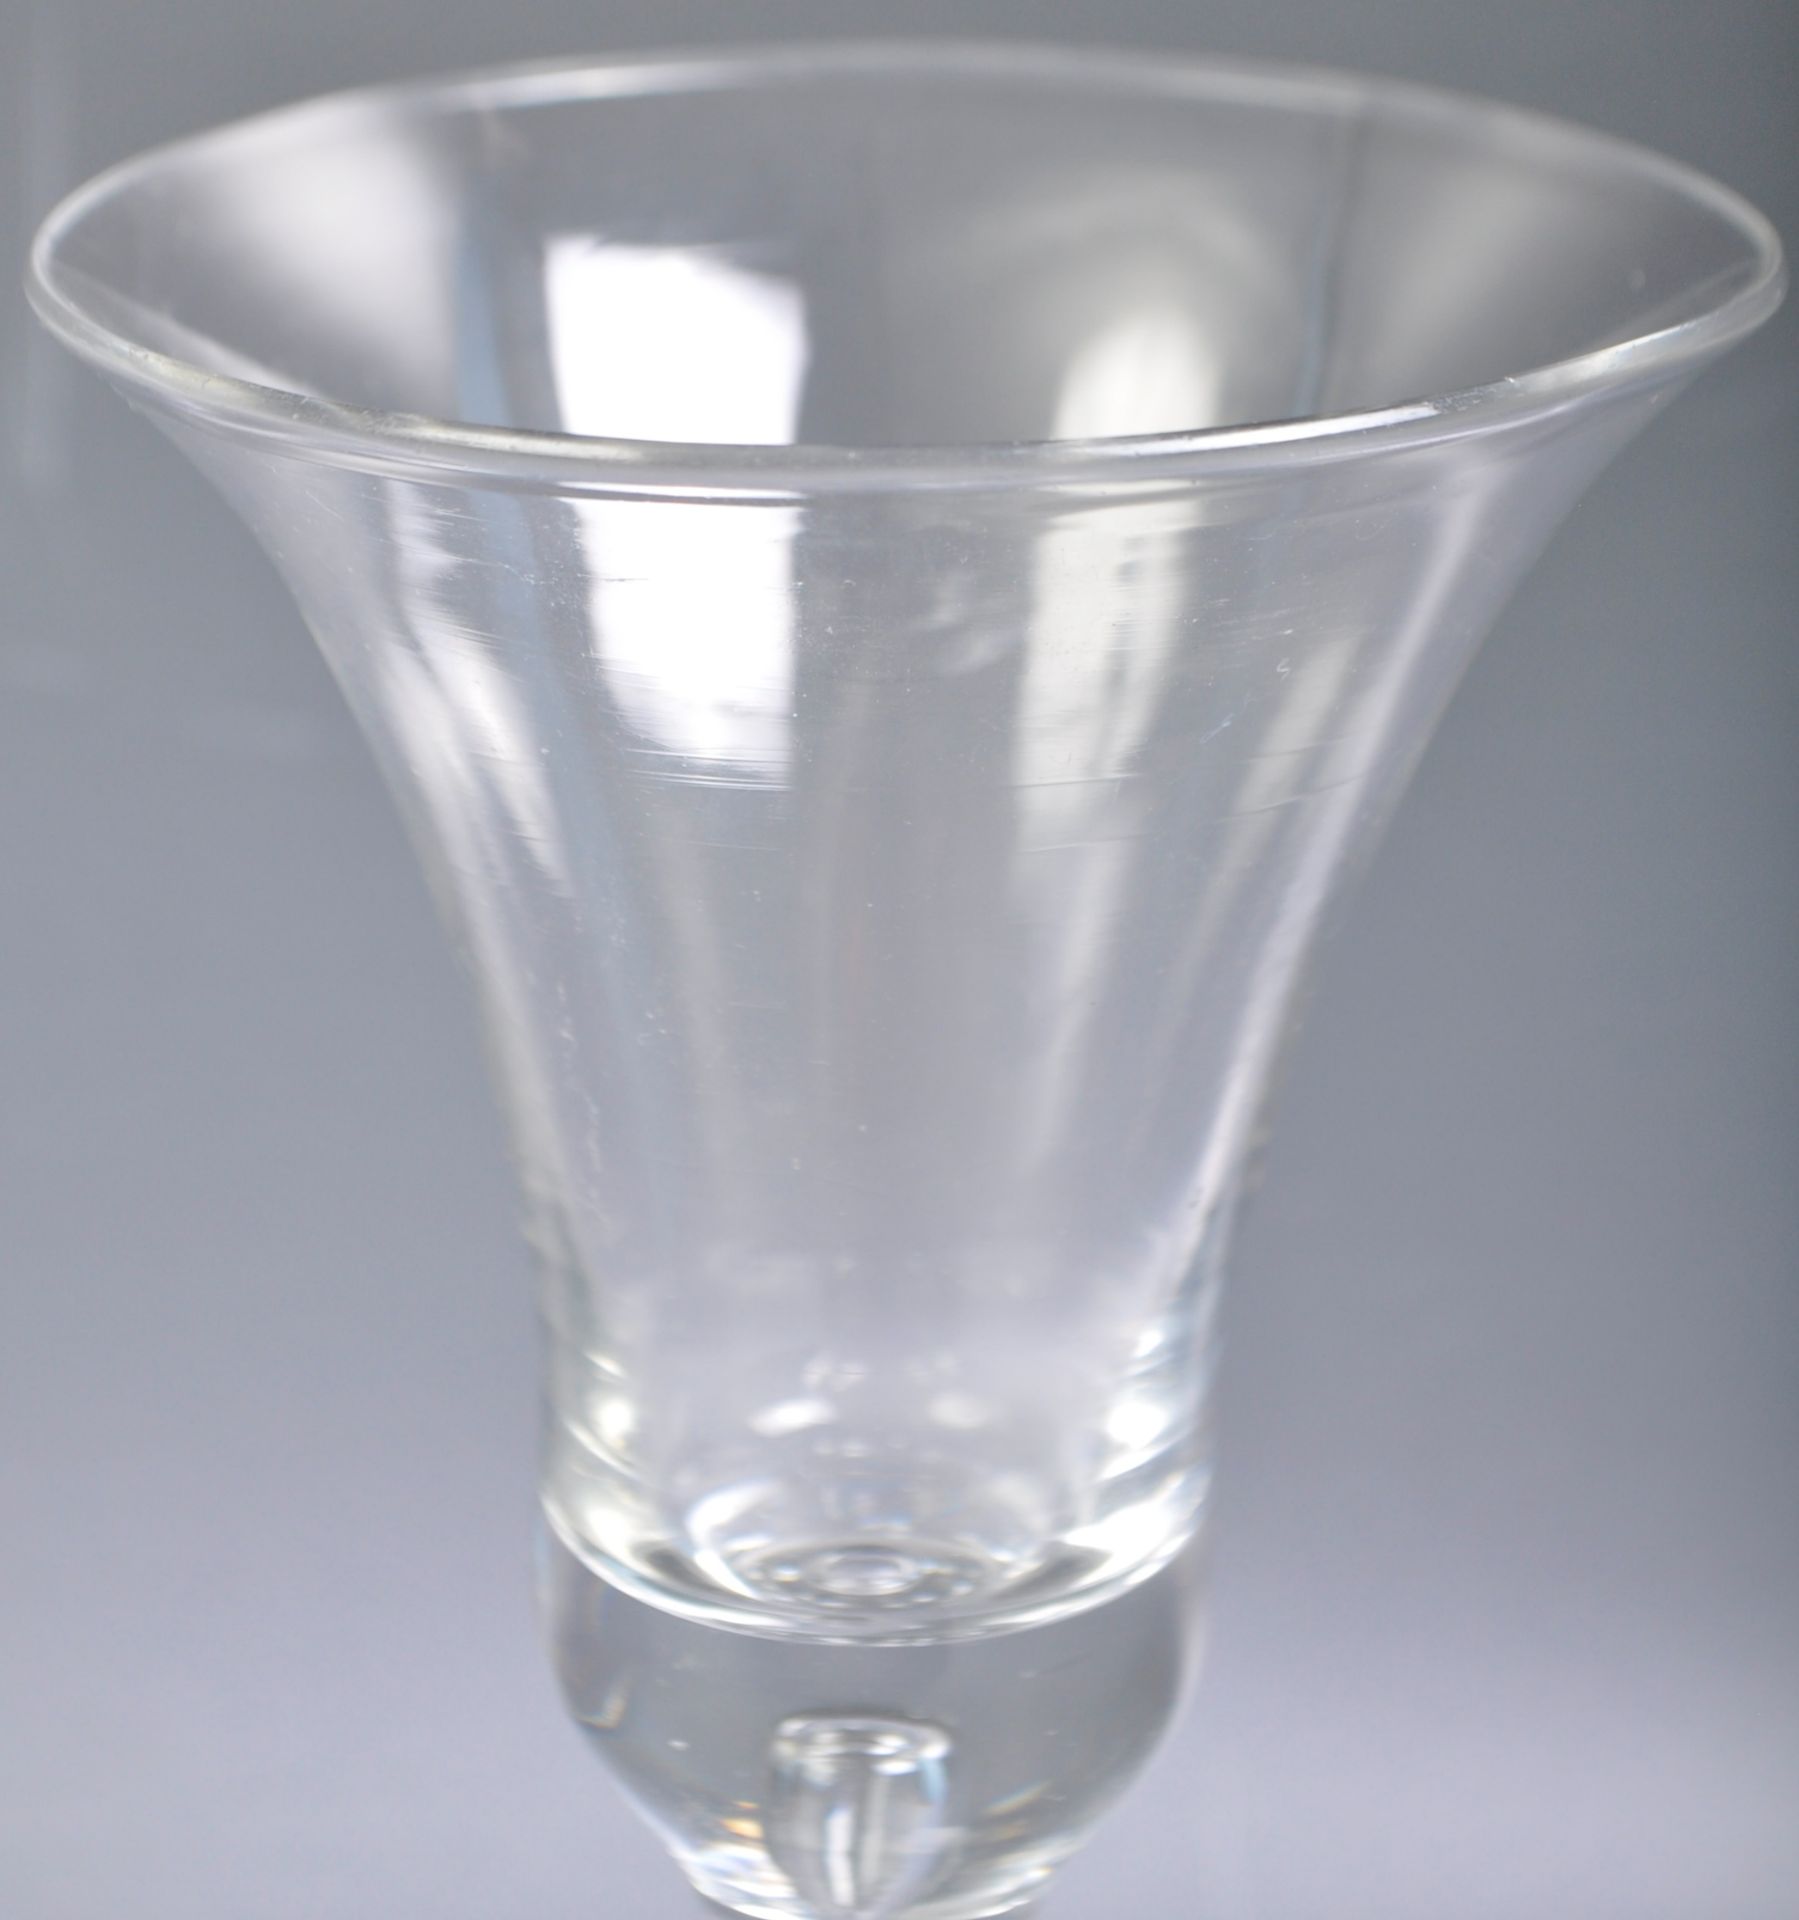 ANTIQUE 18TH CENTURY GEORGIAN PLAIN STEM WINE GLASS - Image 4 of 5